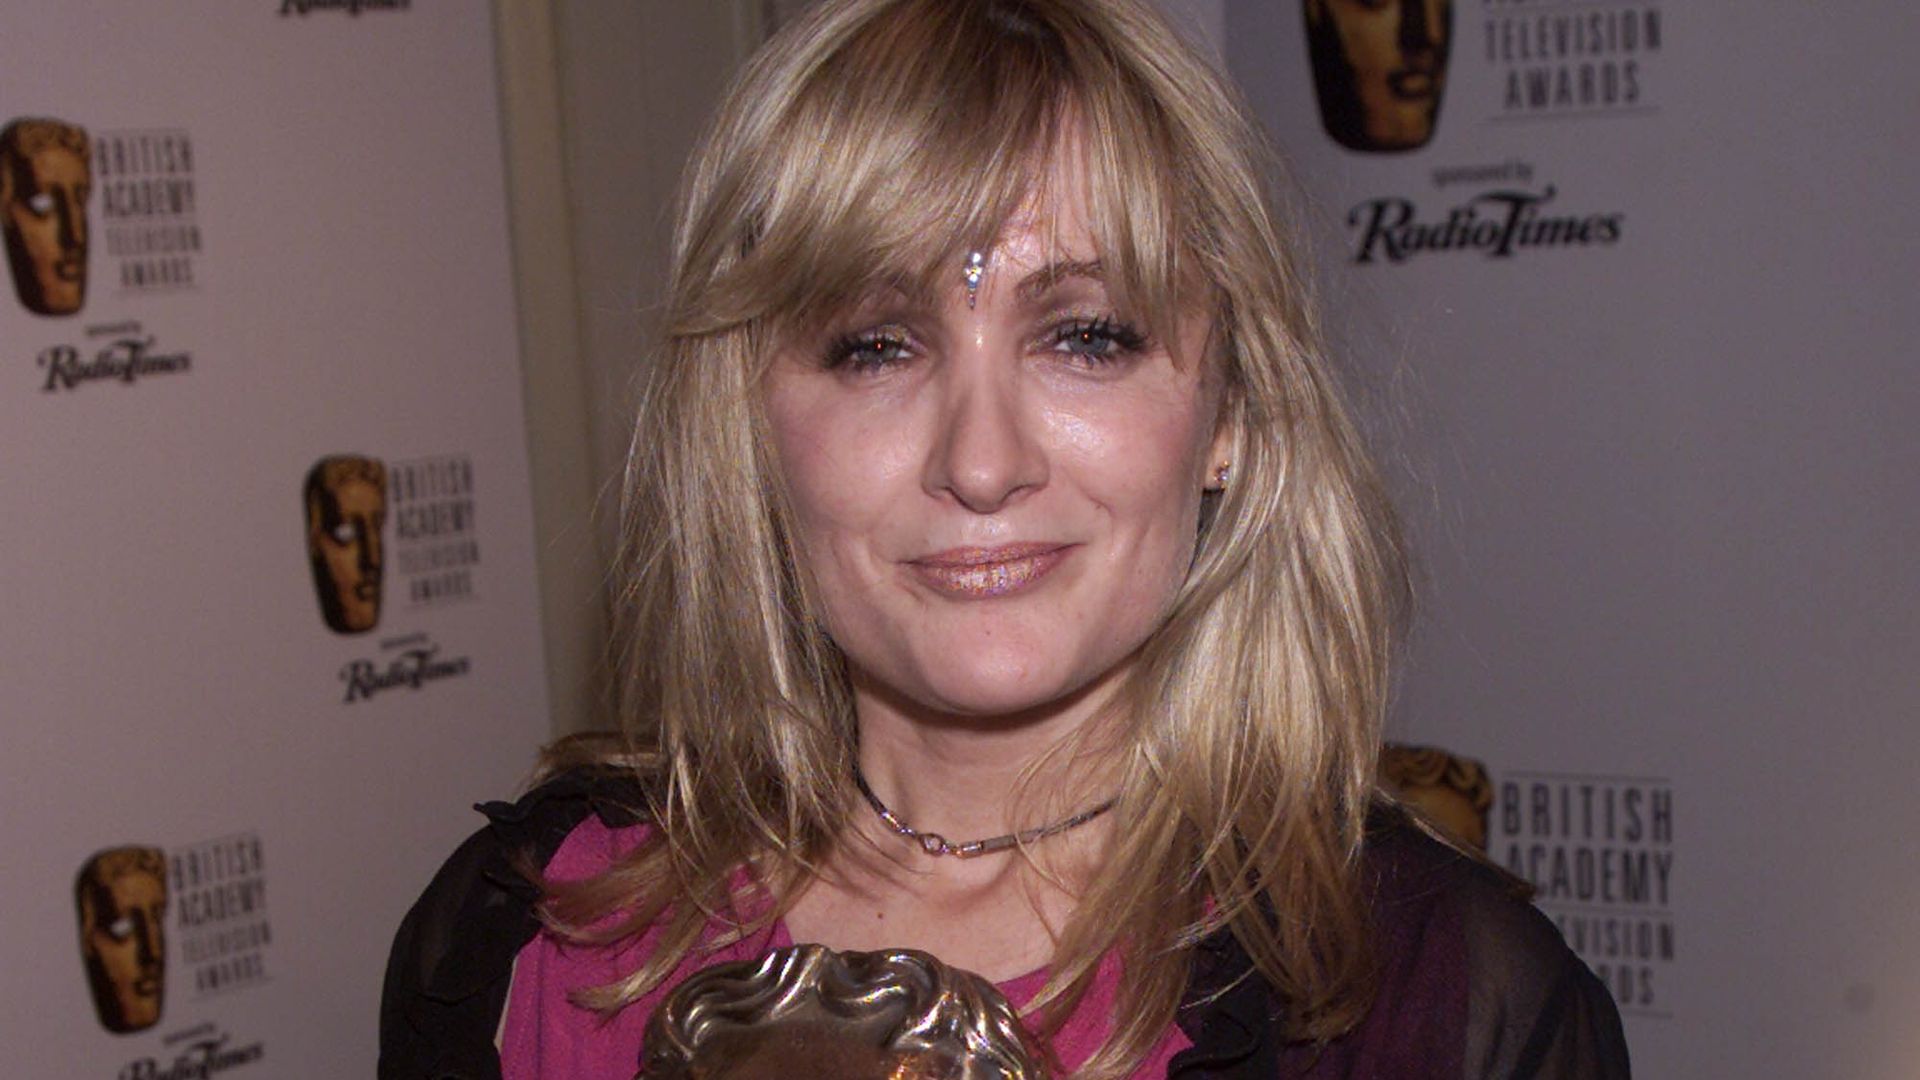 Caroline Ahern smiling holding a BAFTA